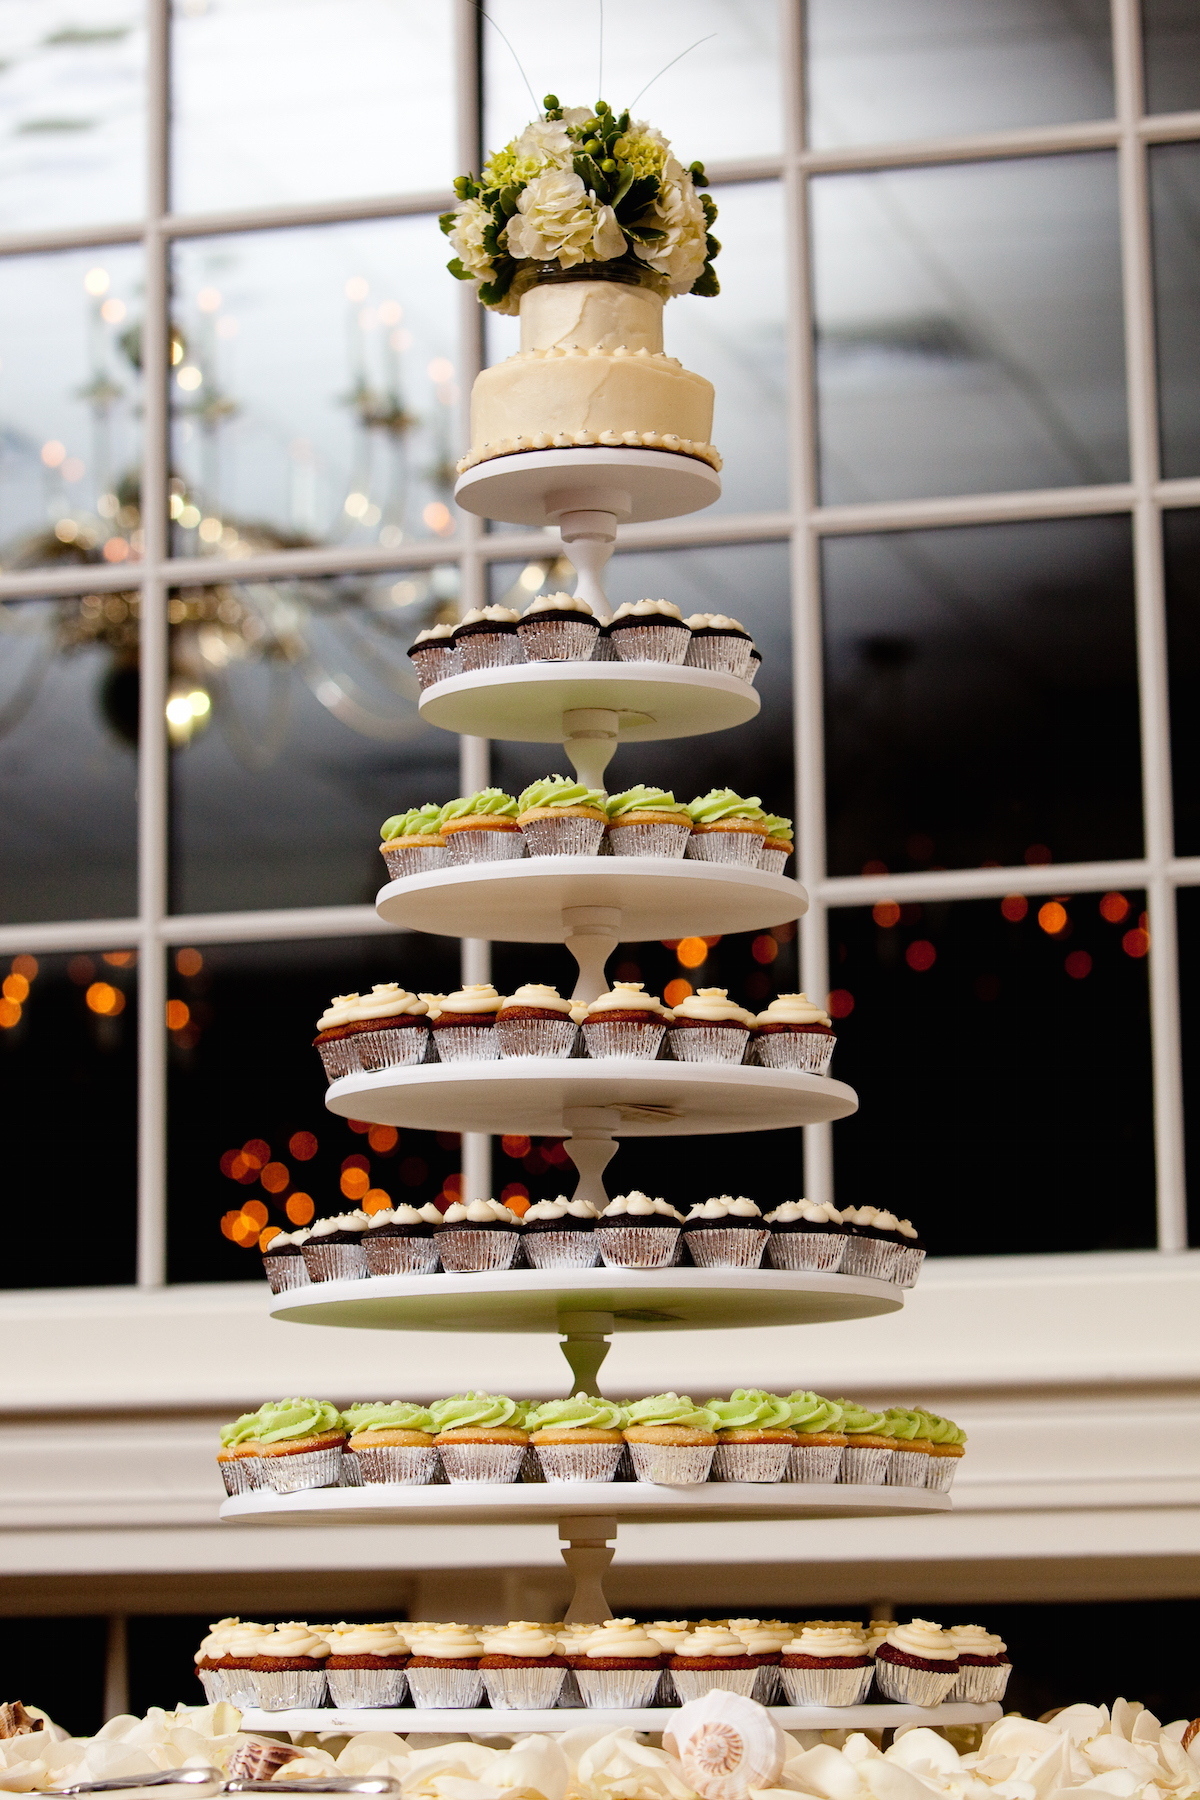 mini cupcakes on a multi level tier in different colors via Shutterstock